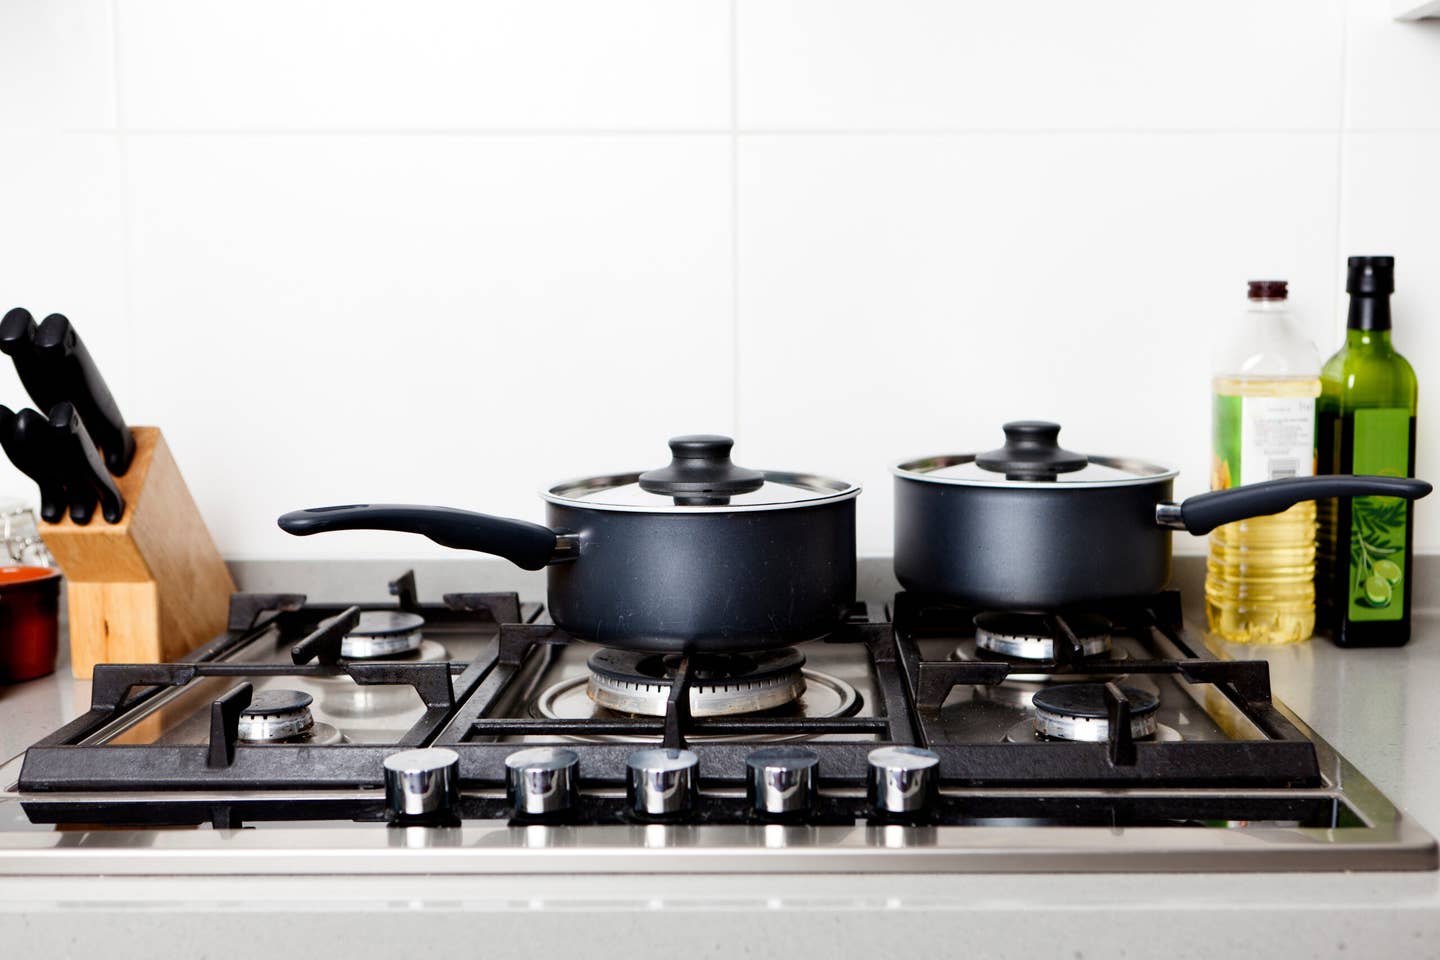 Casserole Stew Pot Ceramic Cookware Soup Cooking Pots Gas Stove High  Temperature Resistant Non-stick Pans For Kitchen